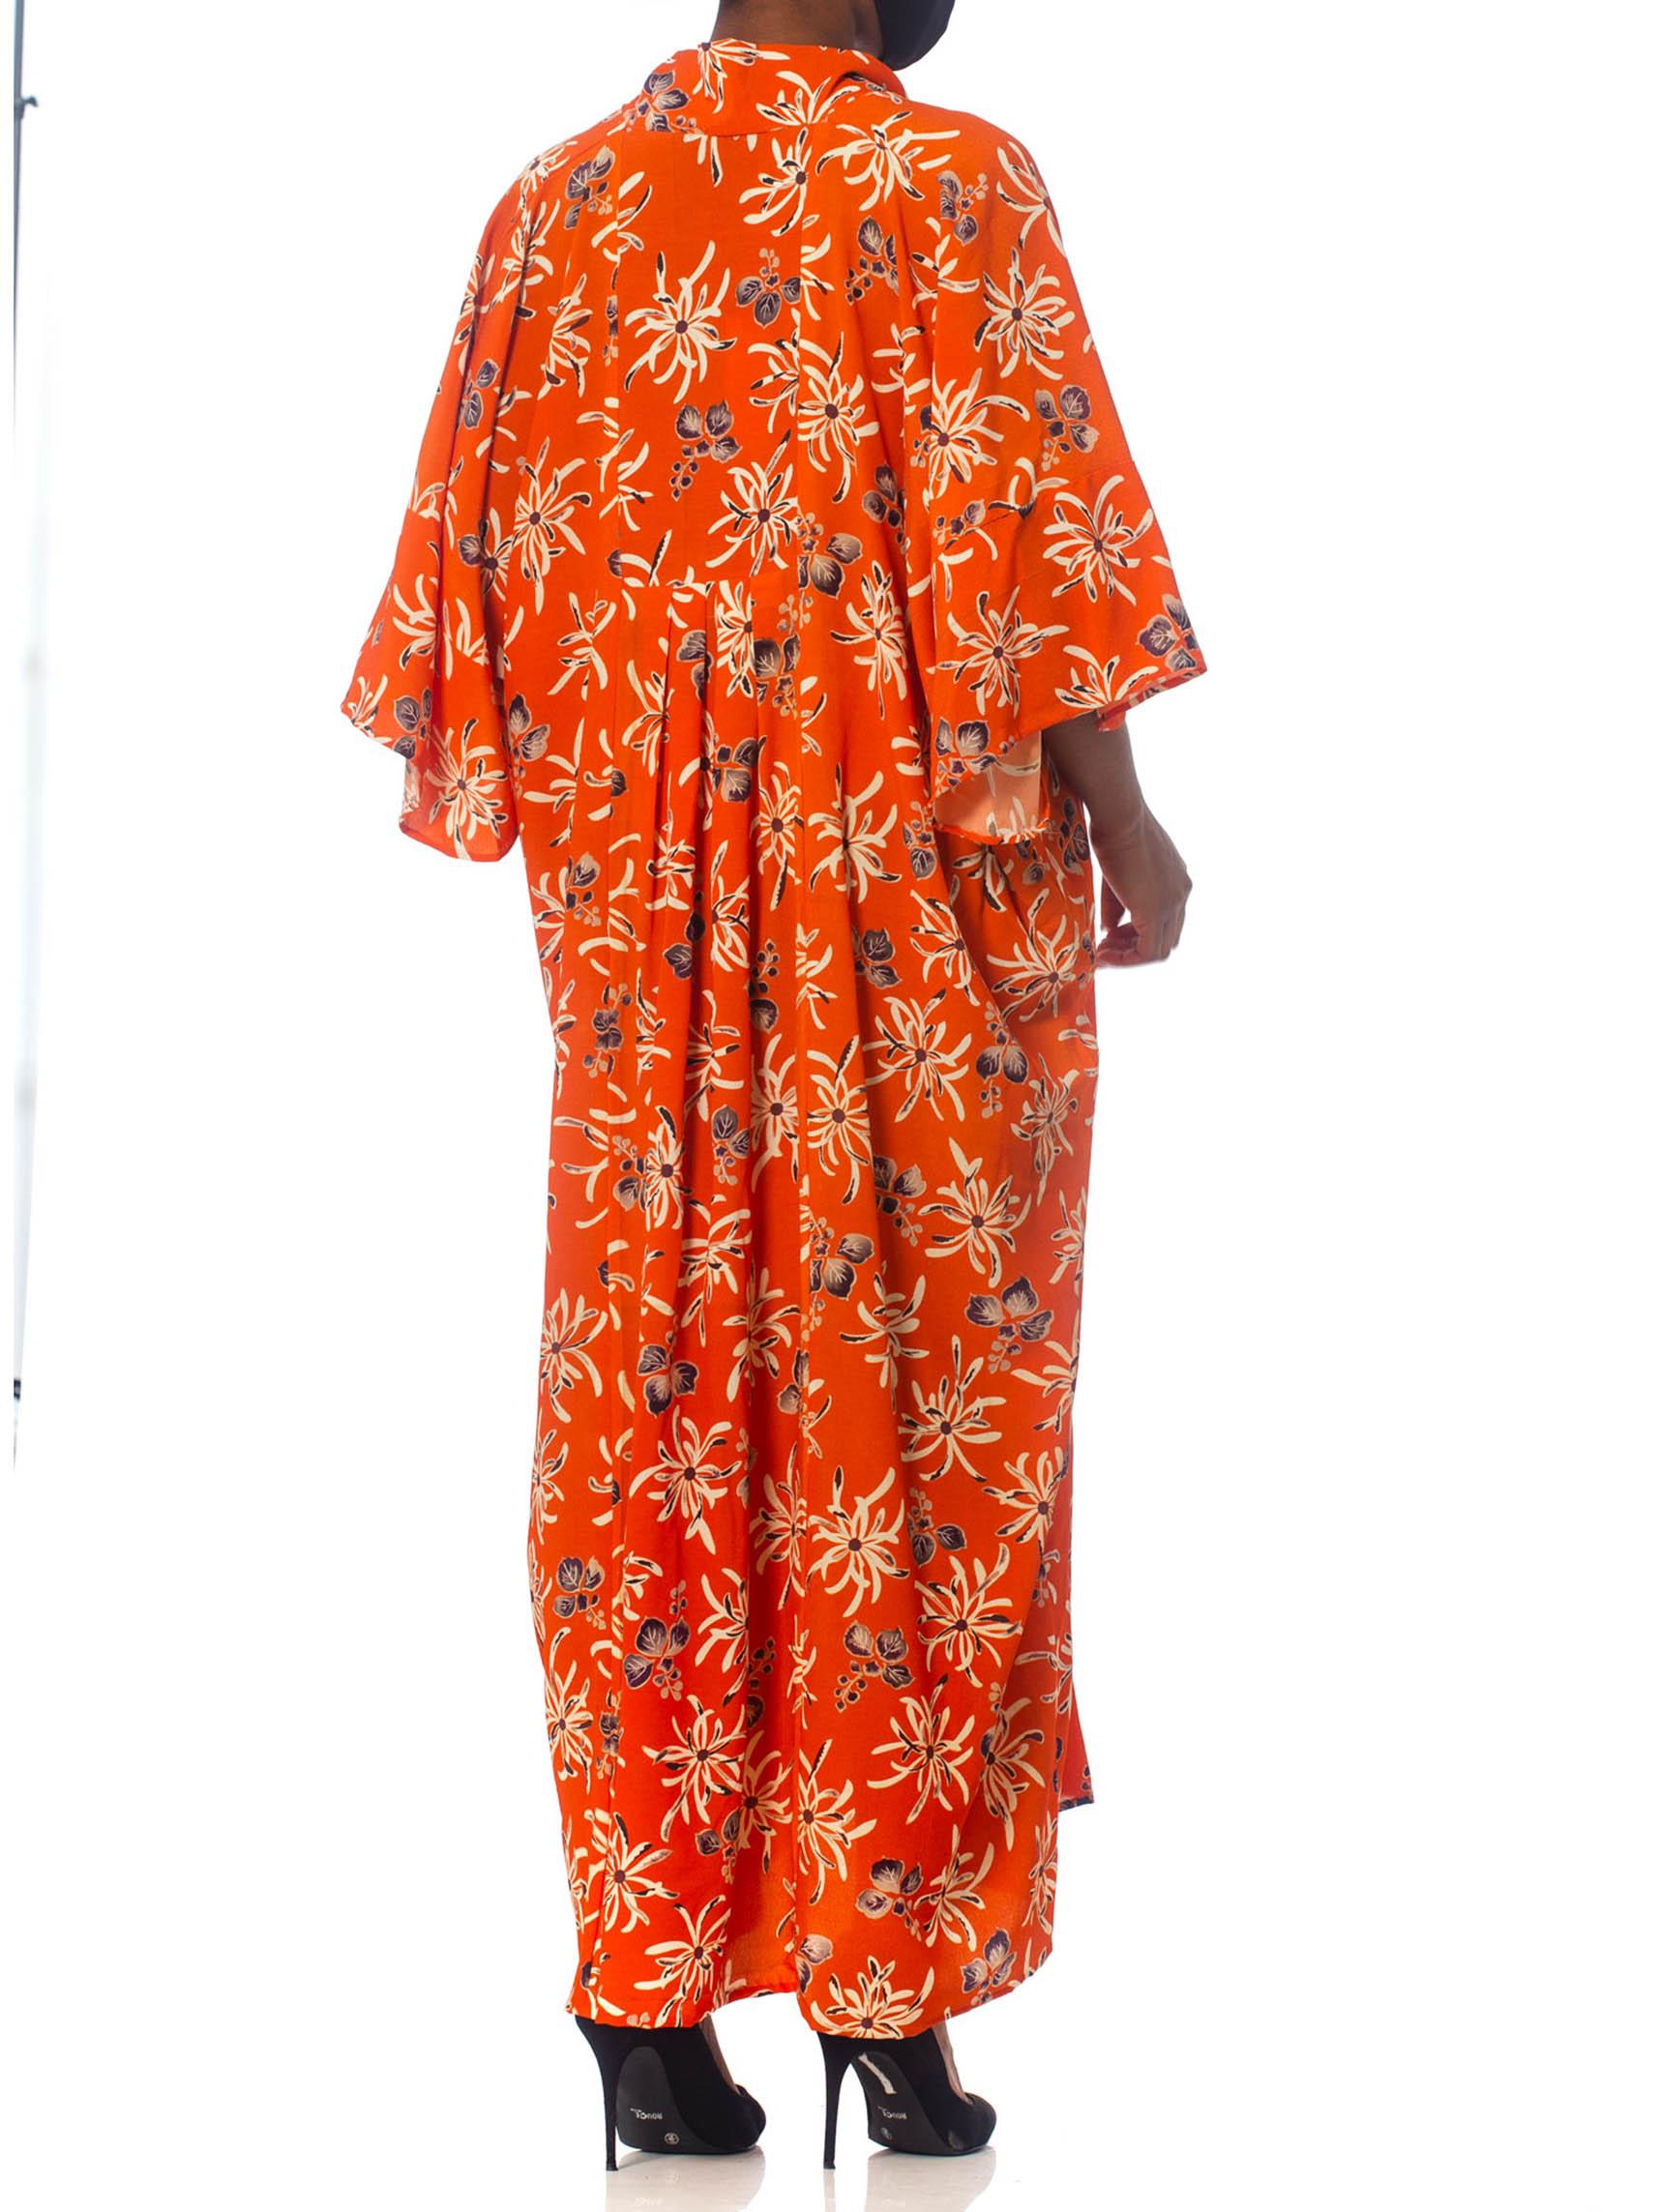 Women's MORPHEW COLLECTION Orange Floral Silk Kaftan Made From Japanese Kimonos